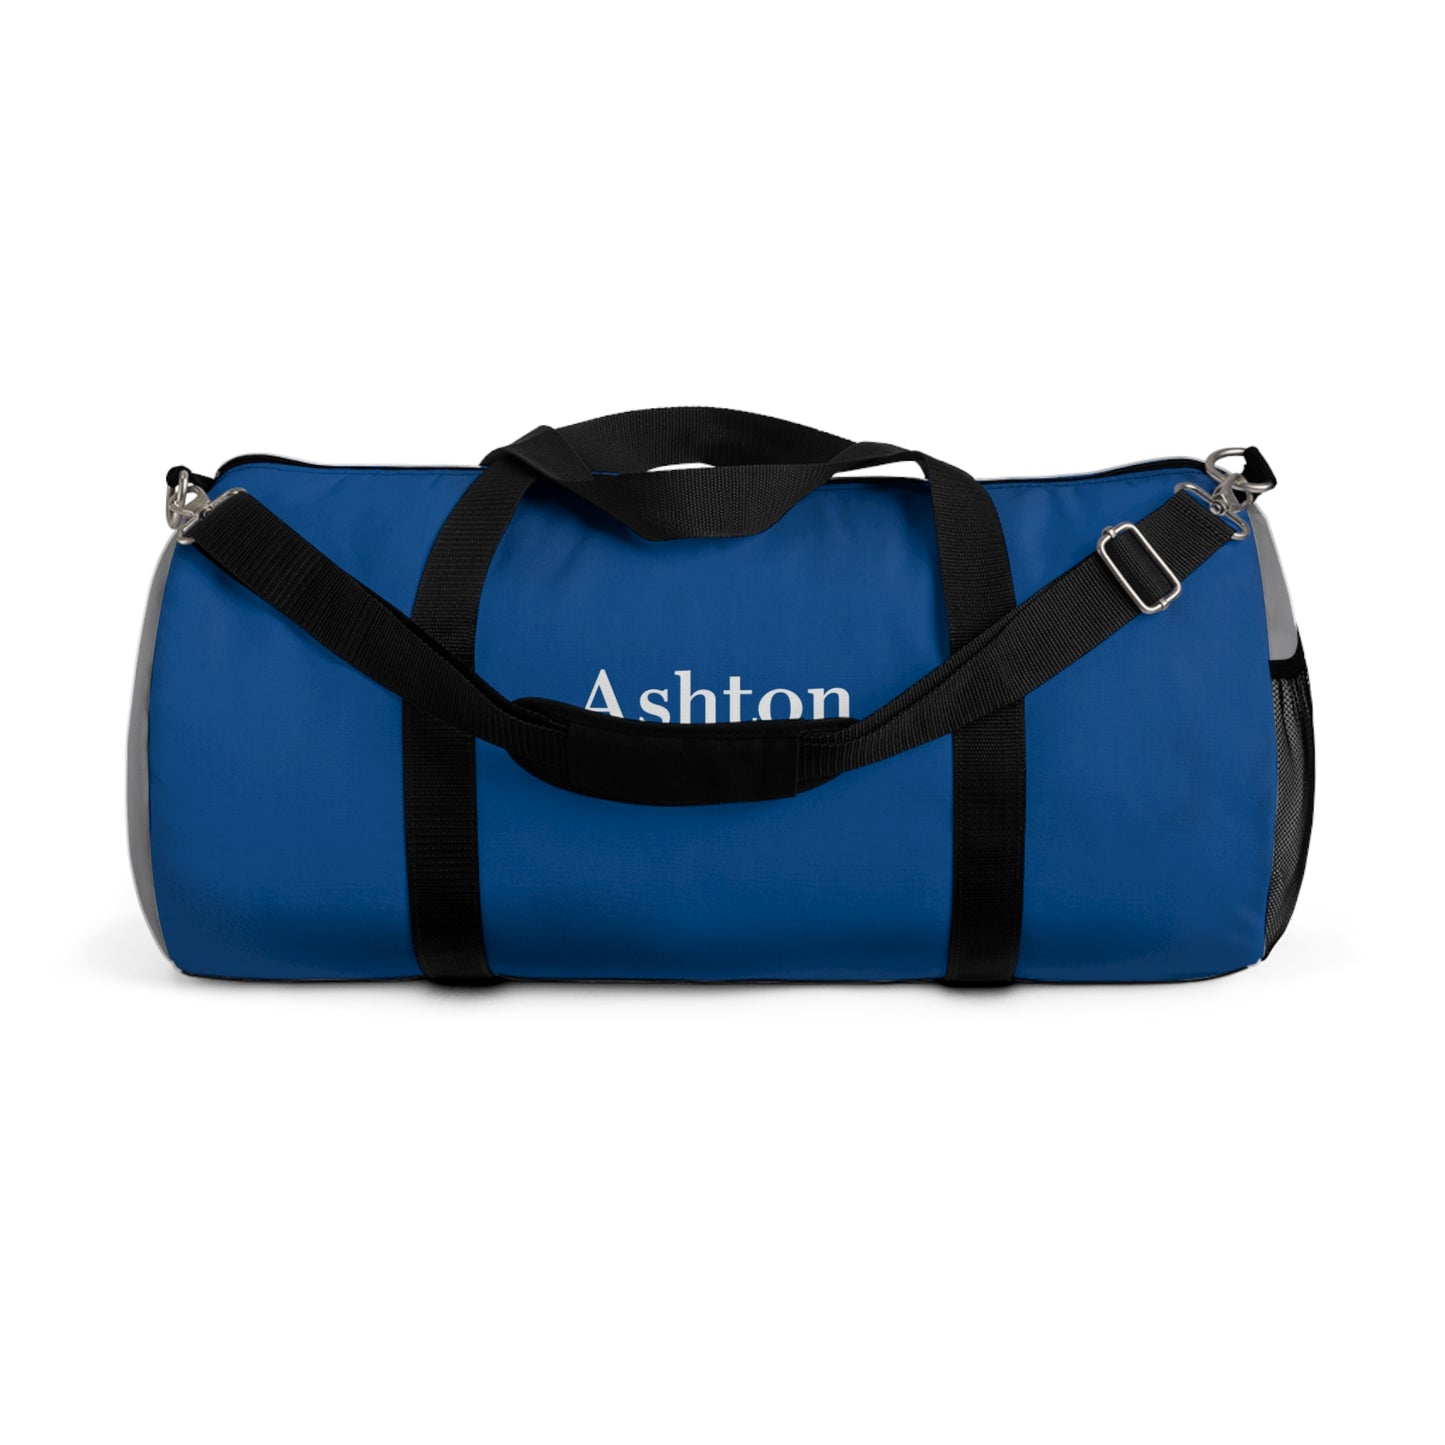 Ashton College Duffel Bag